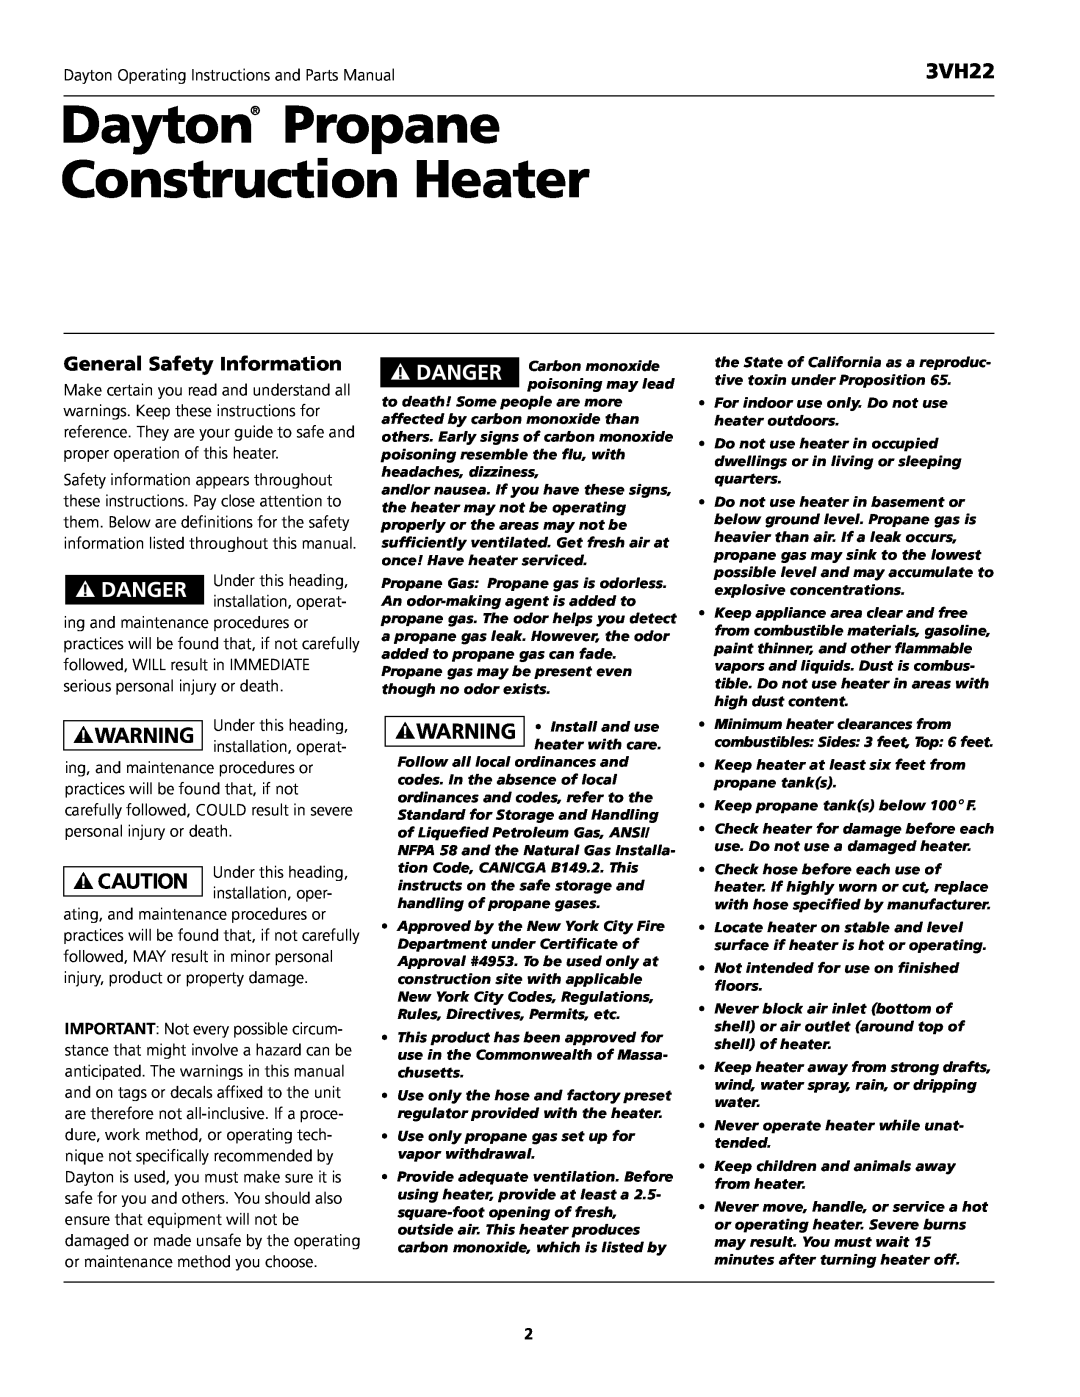 Dayton 3VH22 instruction manual Dayton Propane Construction Heater, General Safety Information 